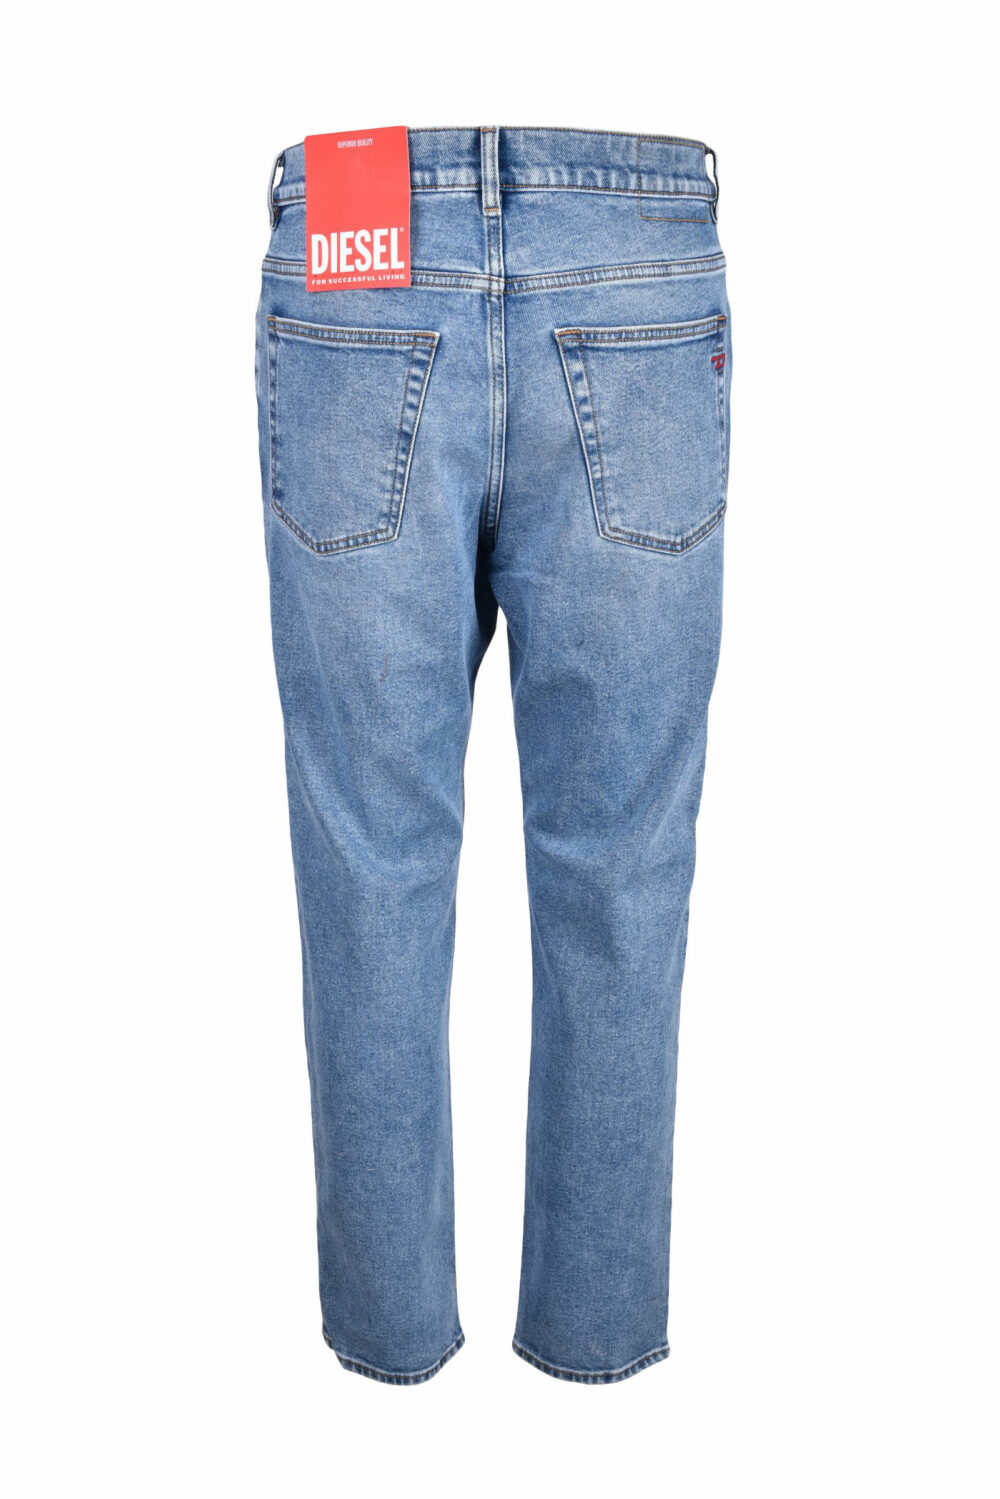 Jeans Diesel jeans Denim - Foto 2